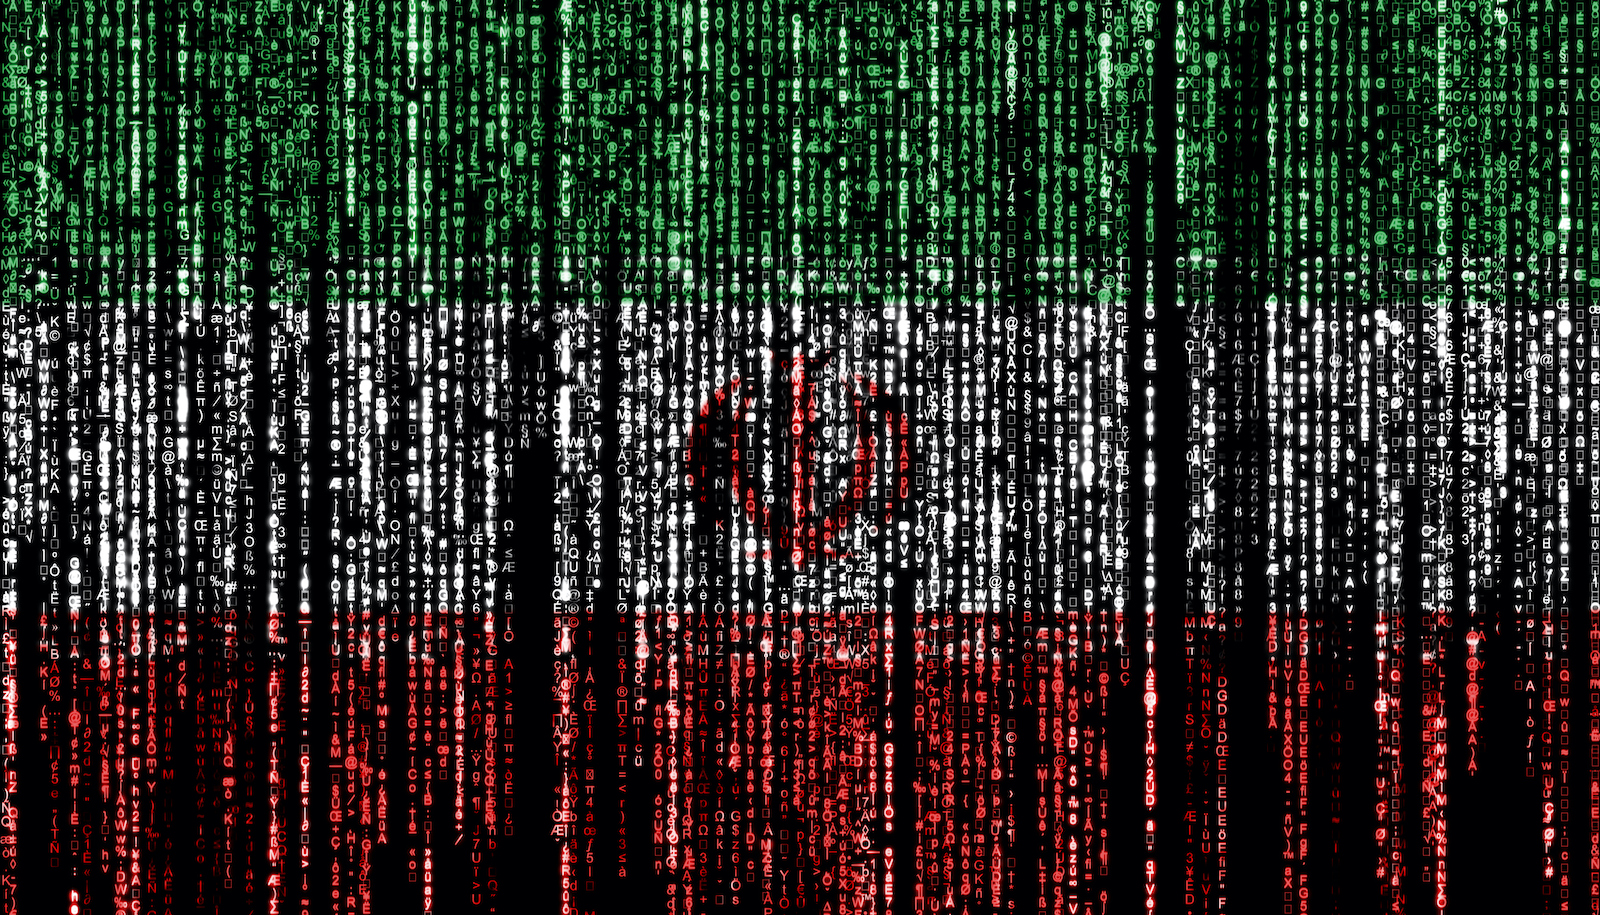 IRAN BLOCKS ACCESS TO DOMESTIC WEBSITES, DECREASING TRANSPARENCY TO INTERNATIONAL COMMUNITY